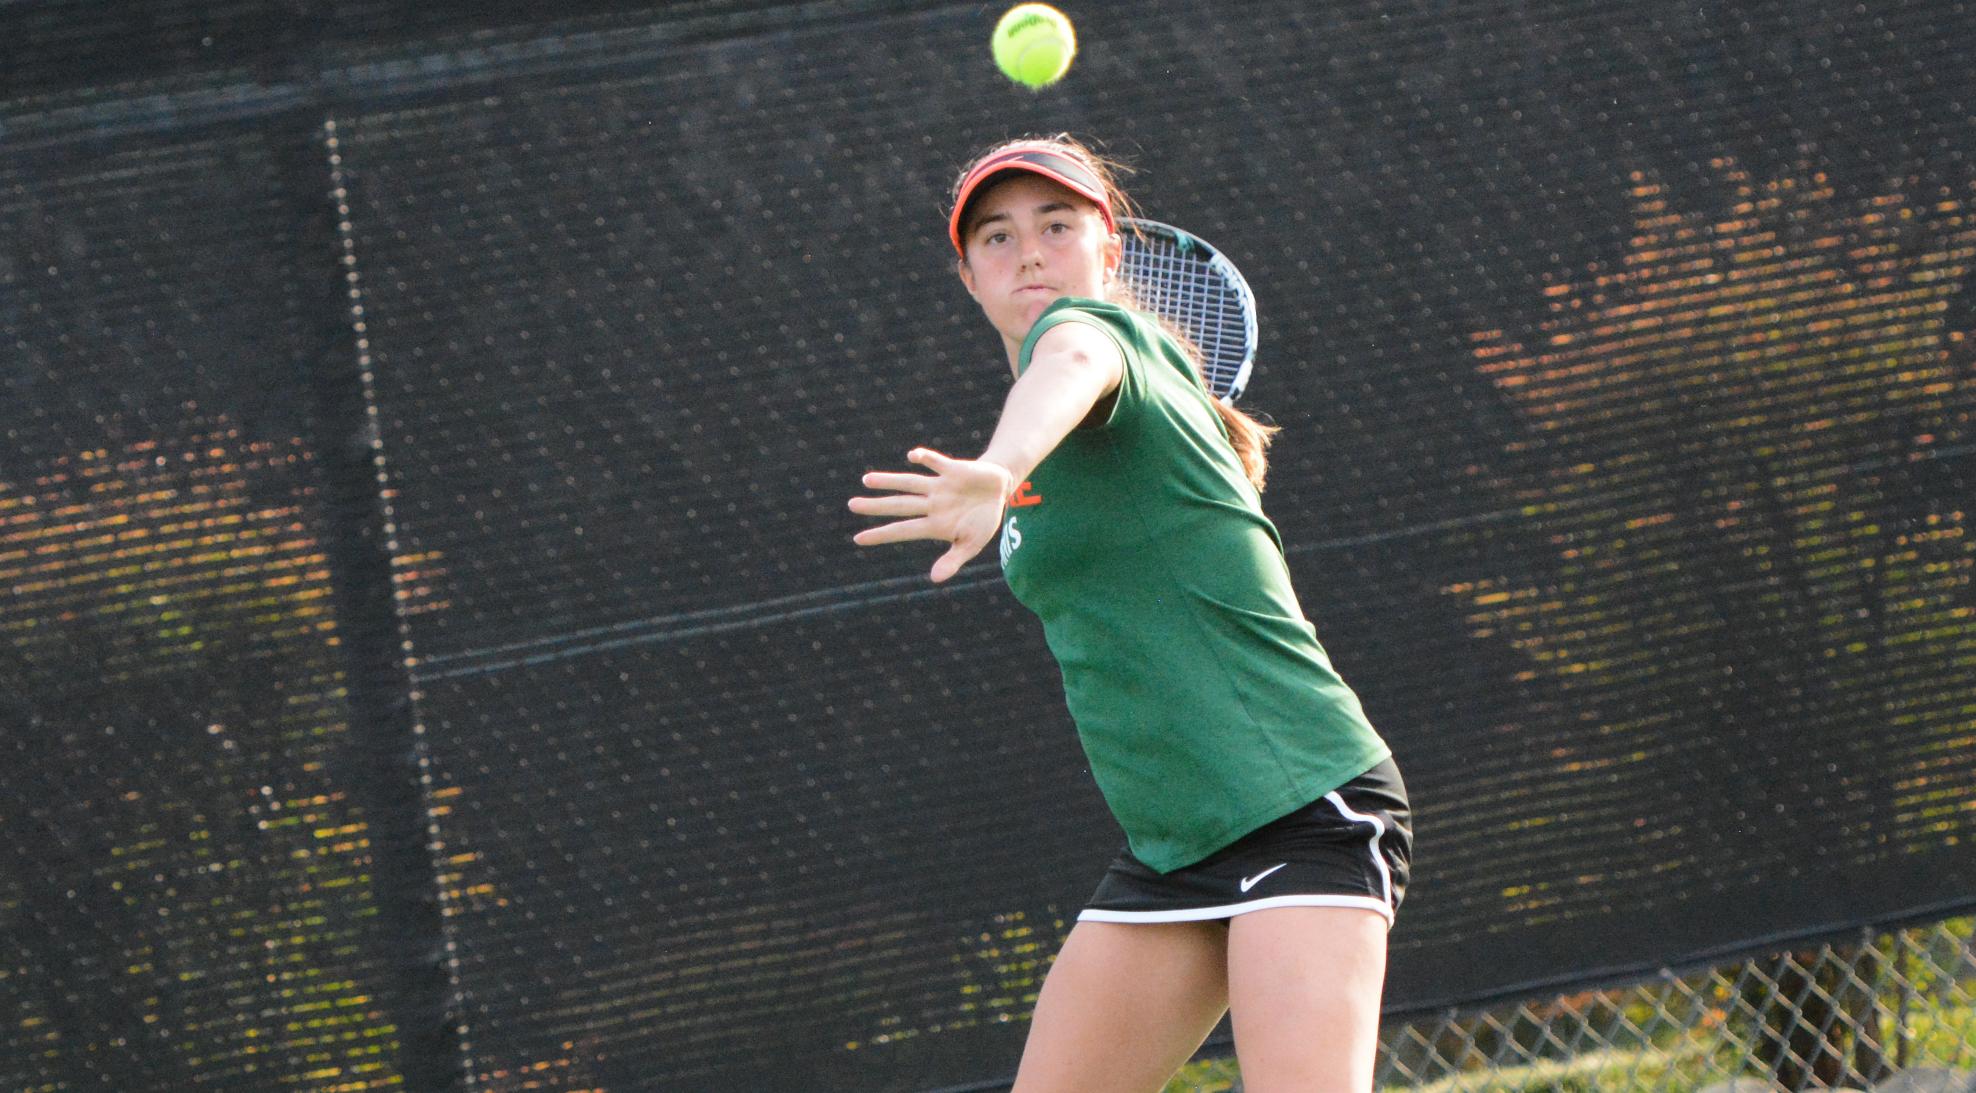 Tennis falls to Washington College, 8-1